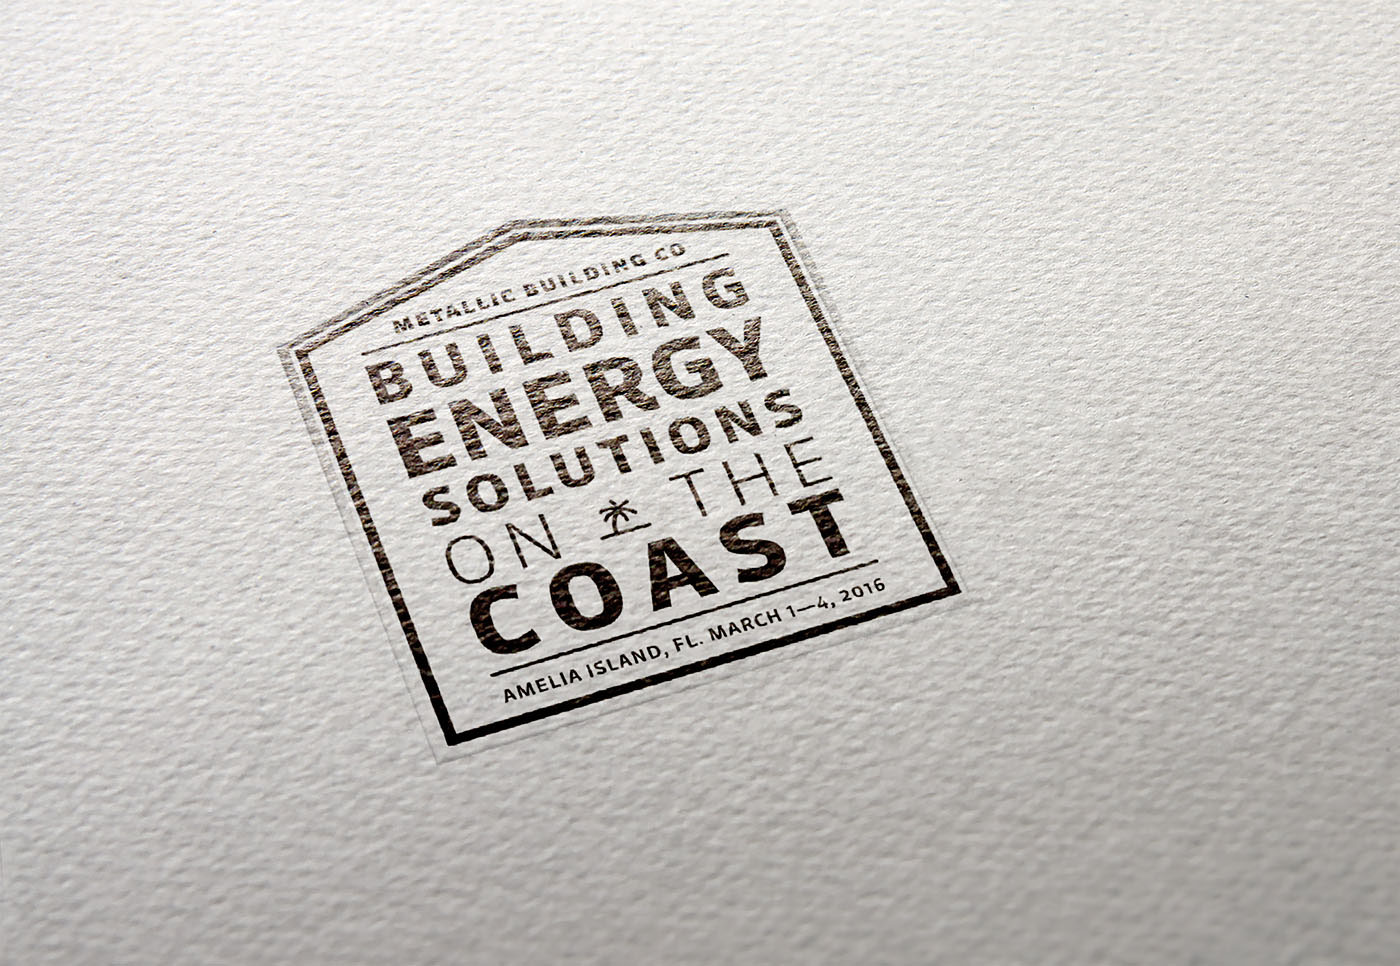 EOTC Metallic Buildign Co editorial design amelia island florida